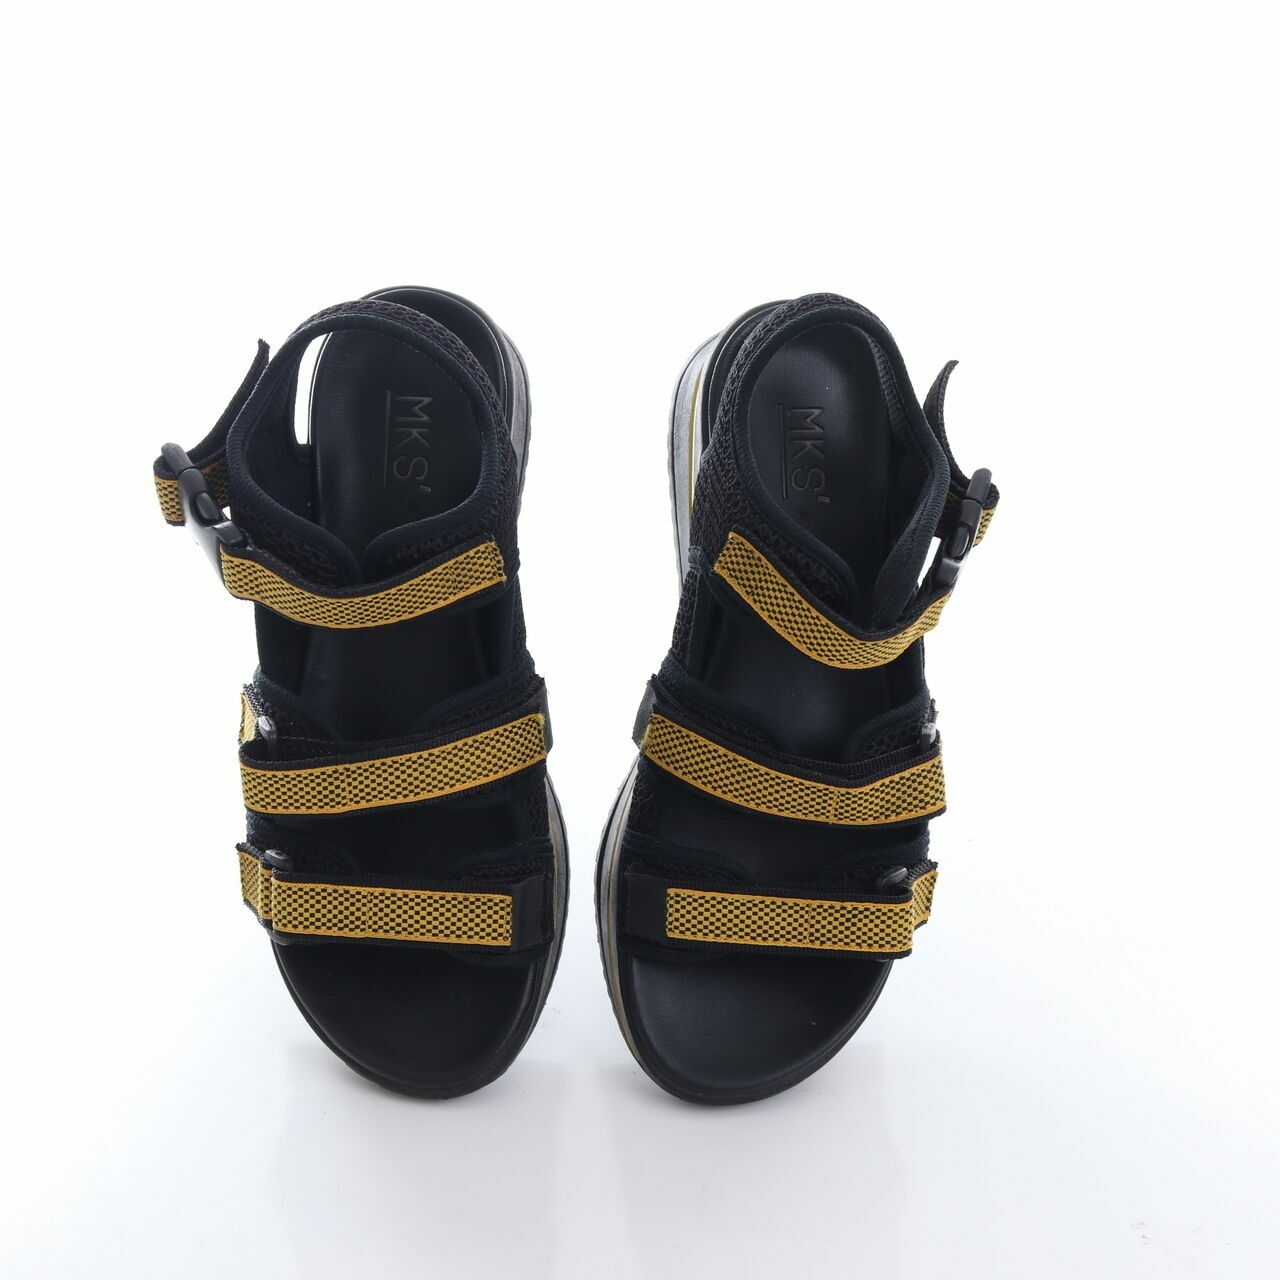 MKS Black & Yellow Sandals